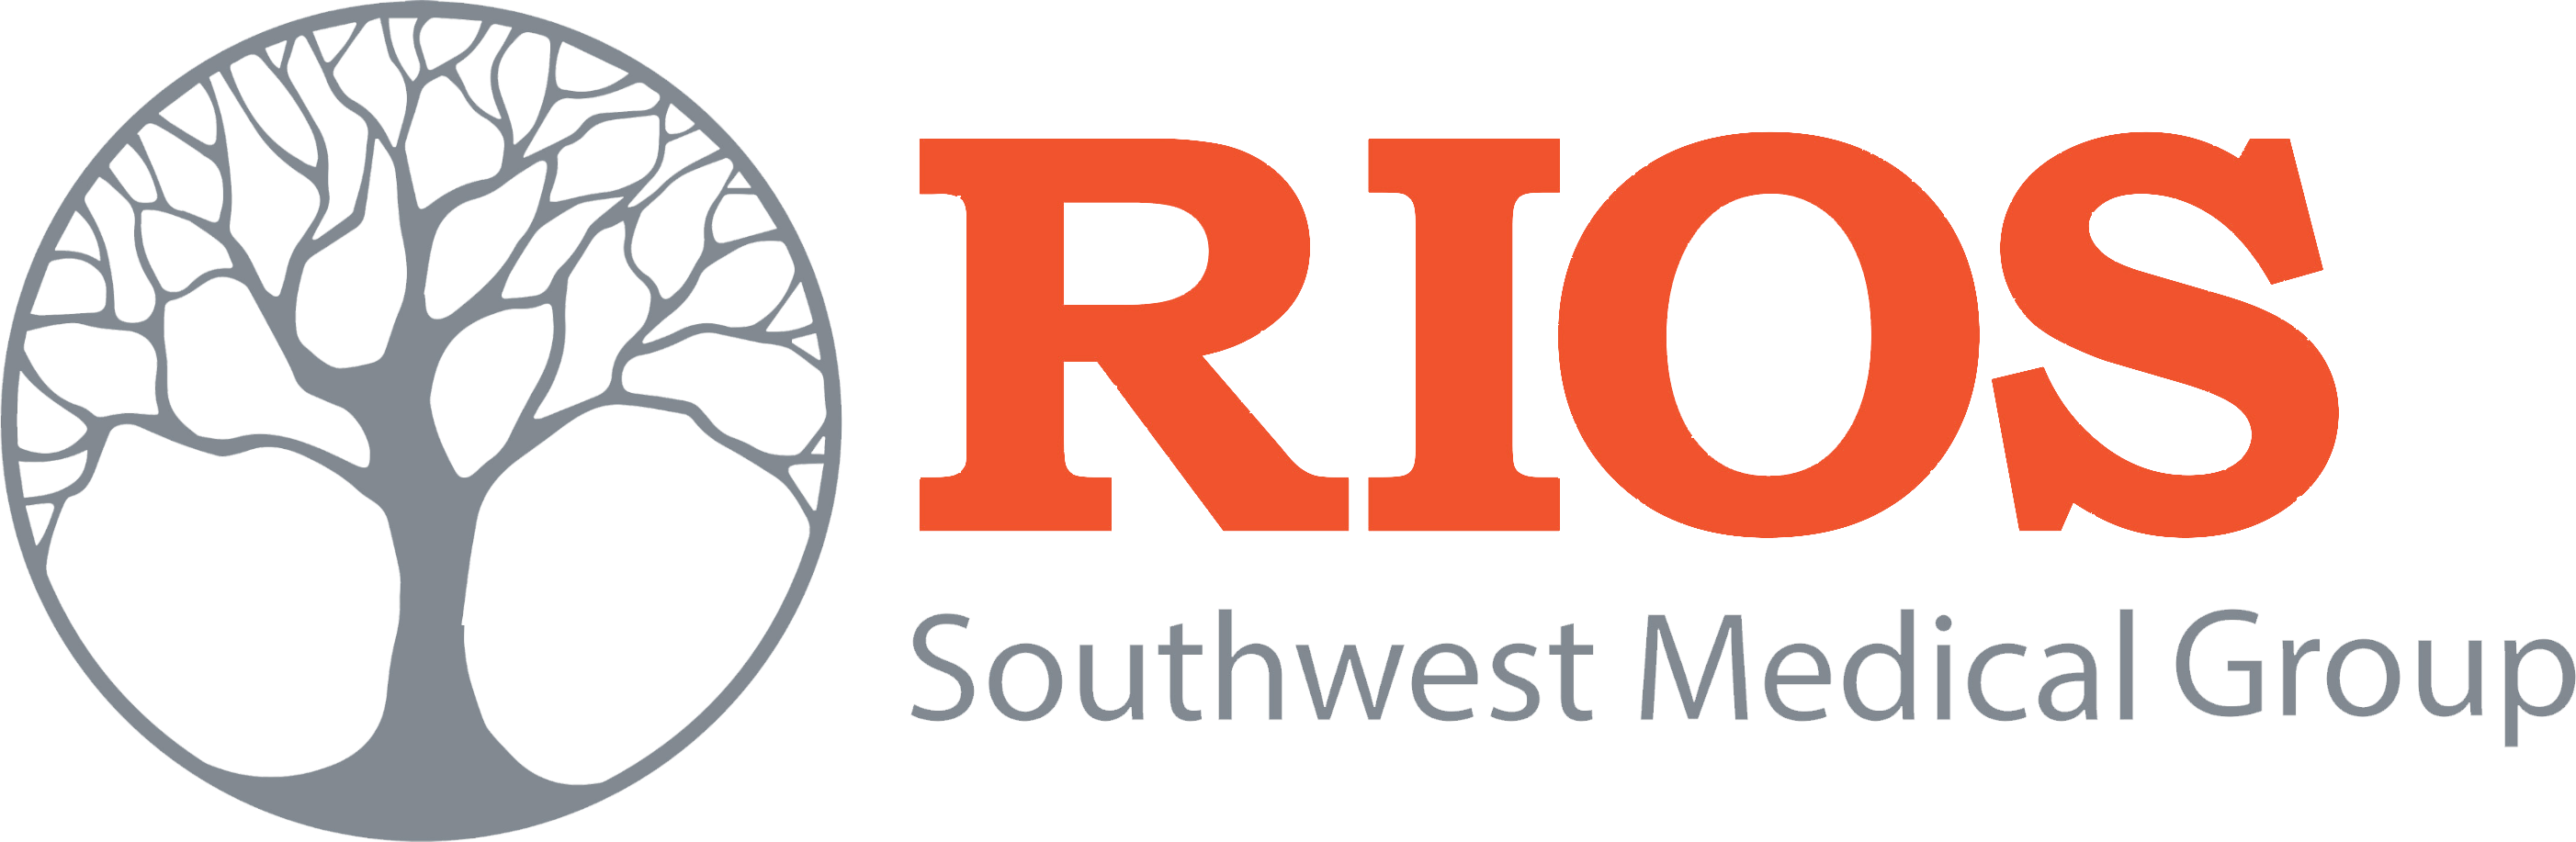 Rios Southwest Medical Group